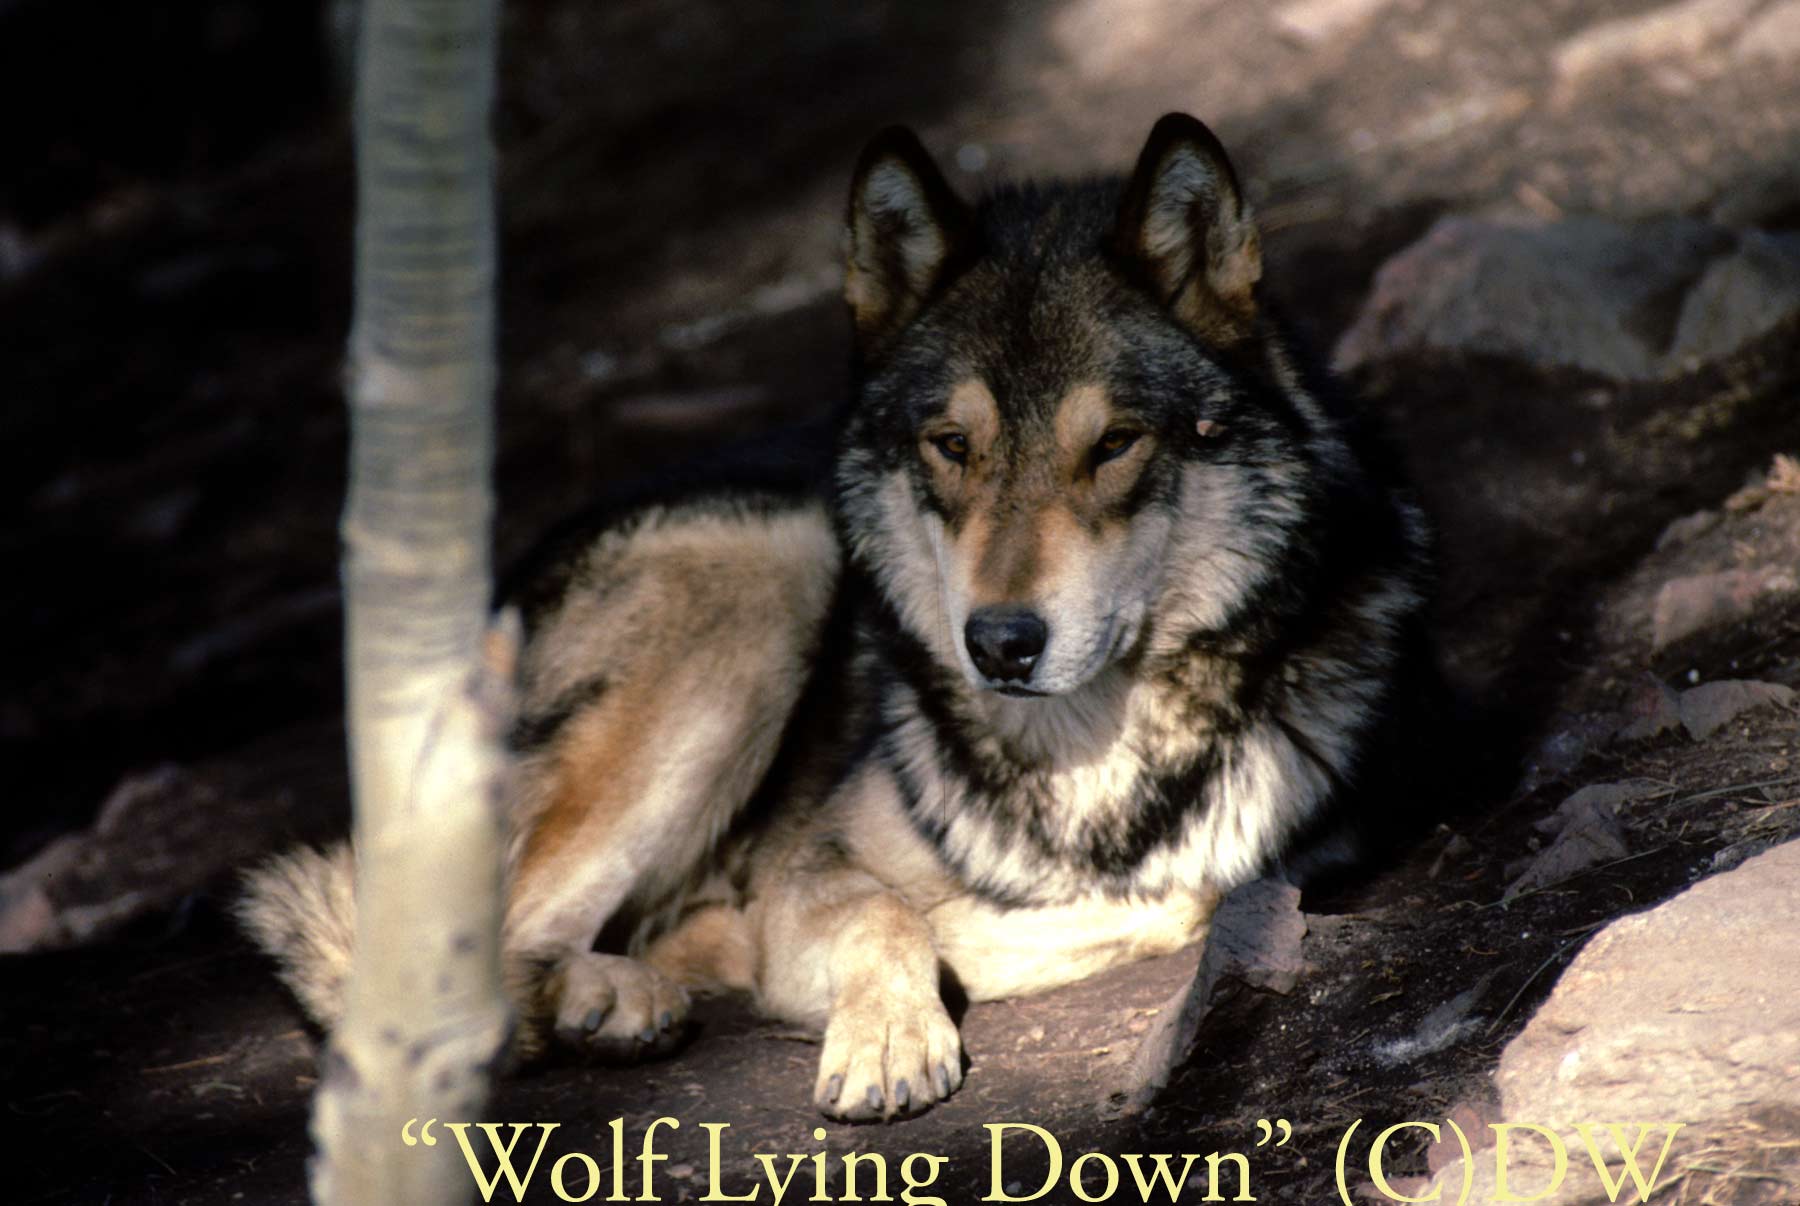 Wolf Lying Down (C) DW